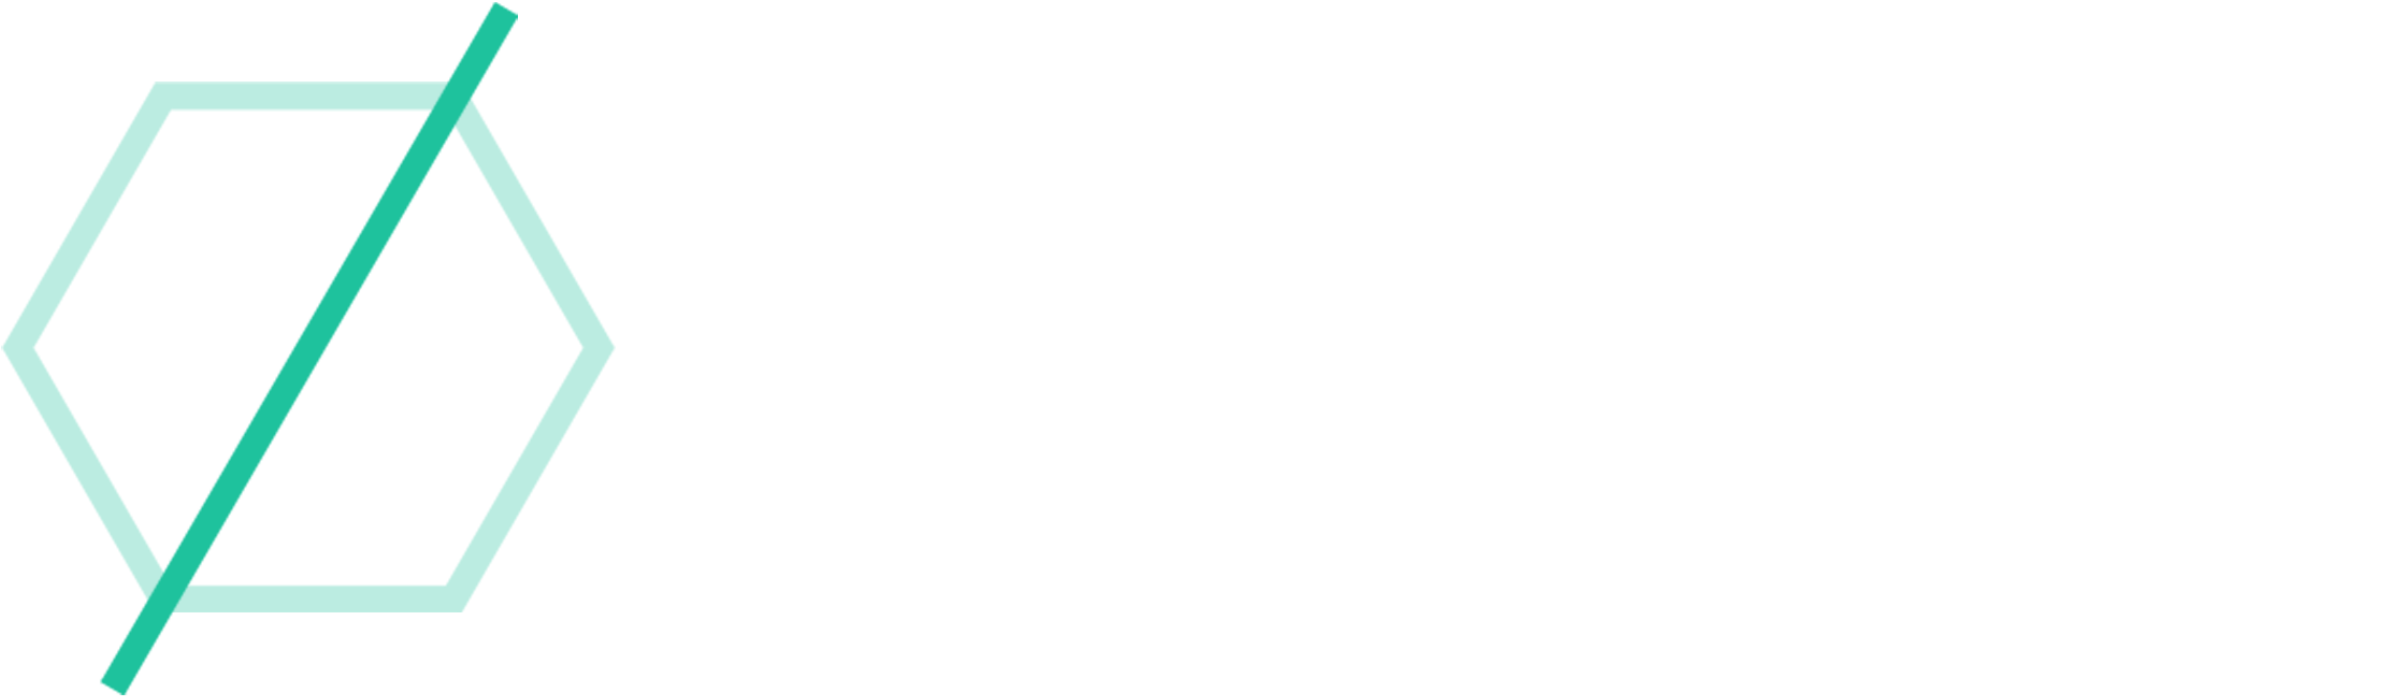 Lukas Germerott Logo